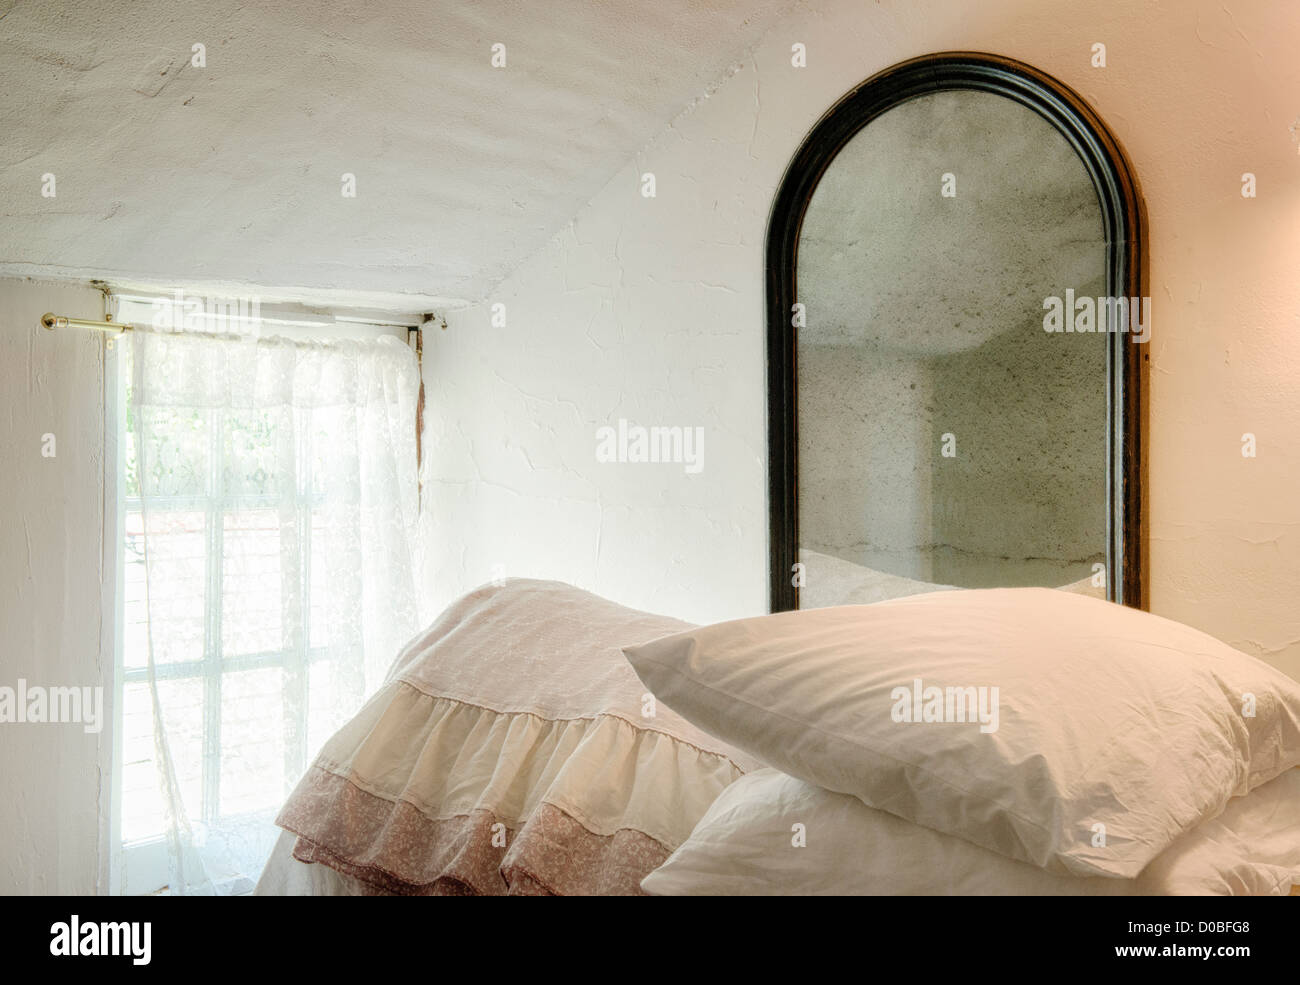 Bedding, window, mirror. Stock Photo